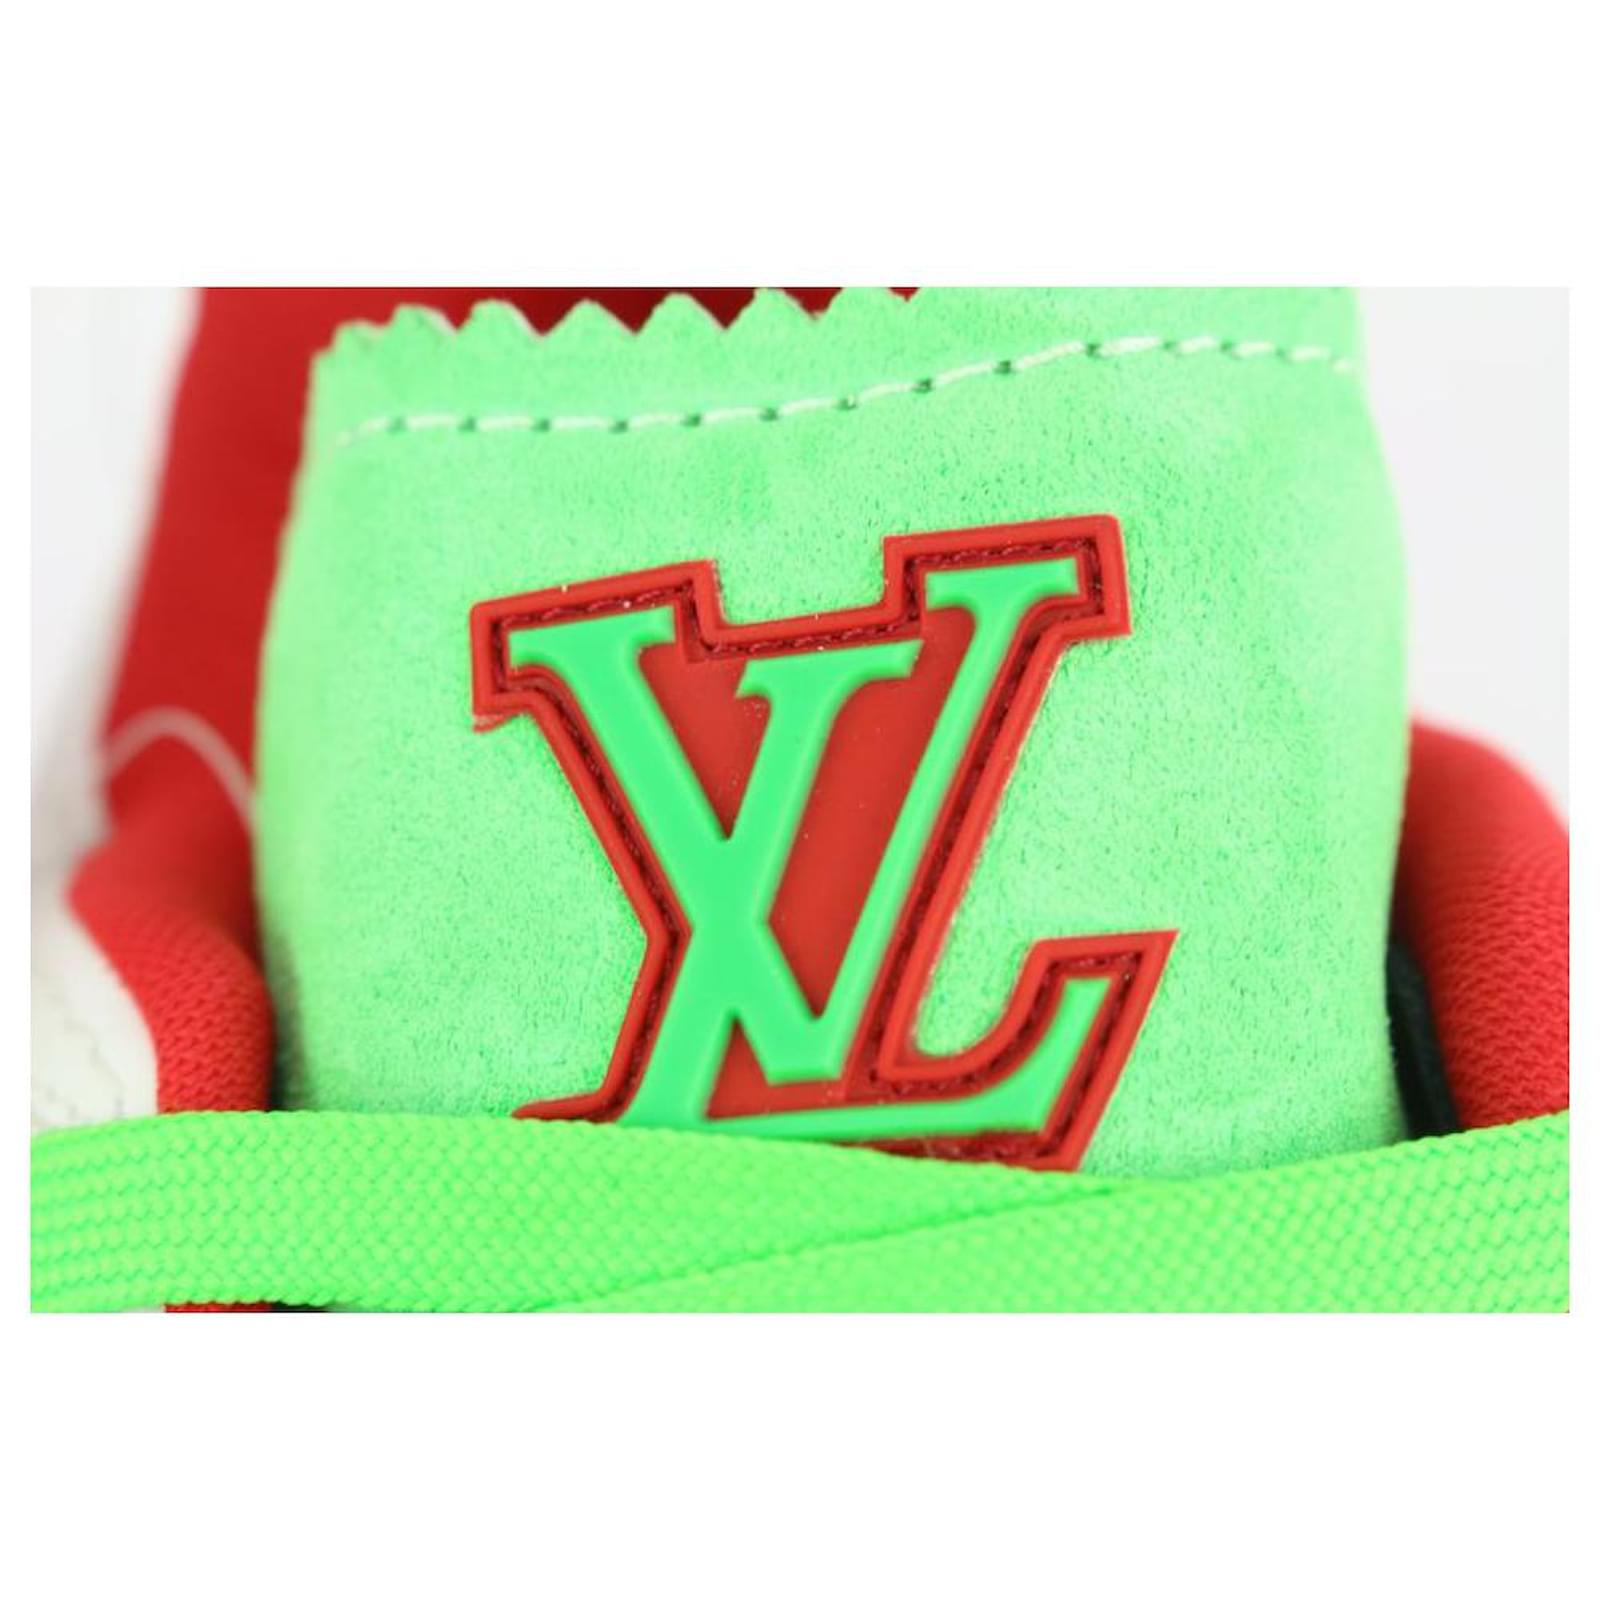 Louis Vuitton Men's 10.5 US Virgil Abloh Trainer Red Neon NYC Soho Pop Up 127lv29